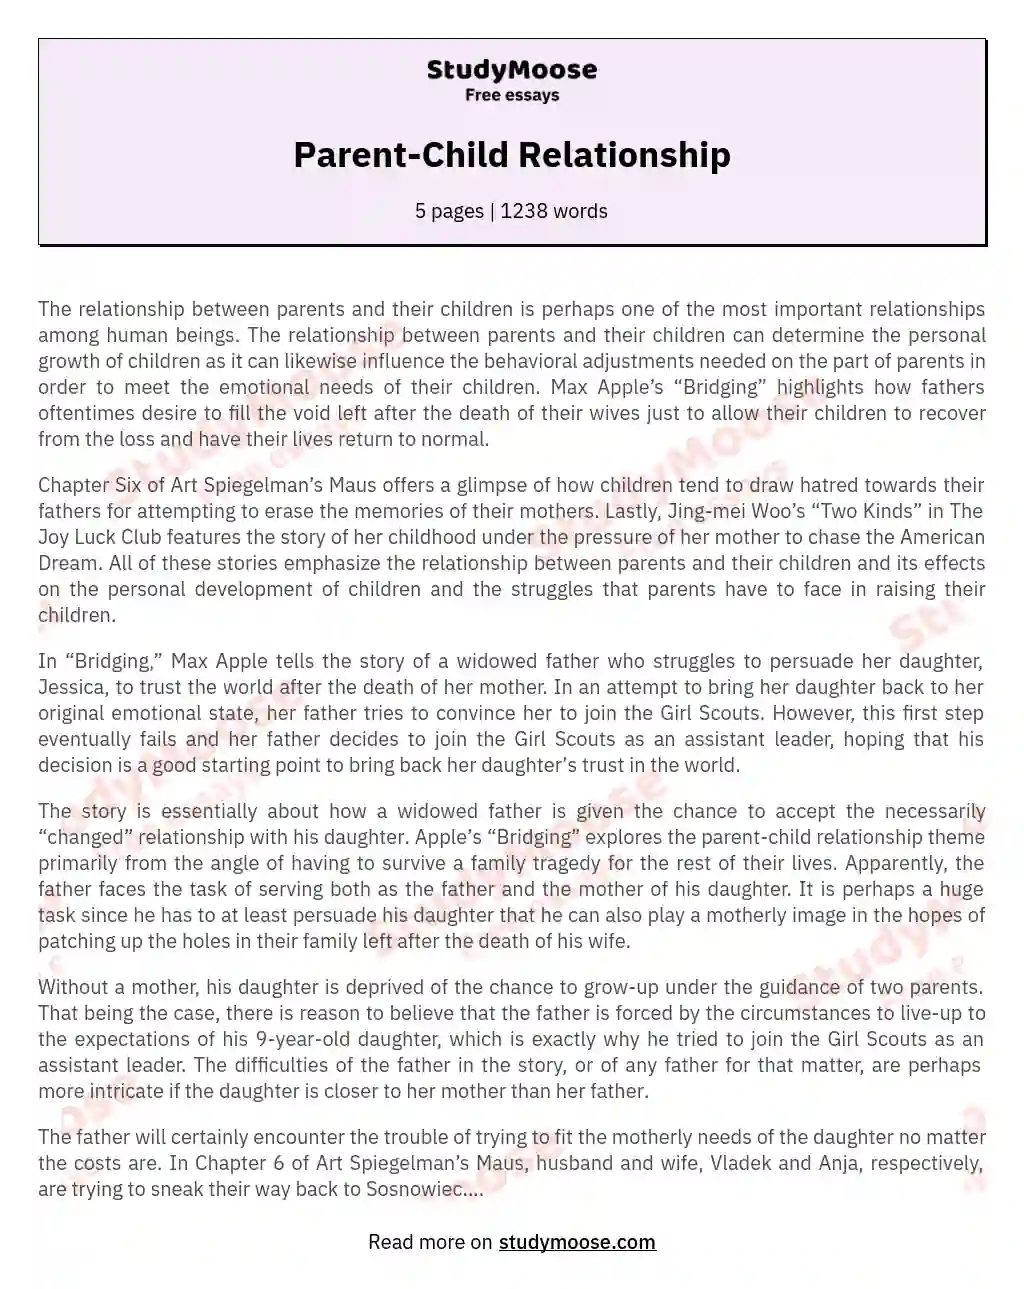 Parent-Child Relationship essay